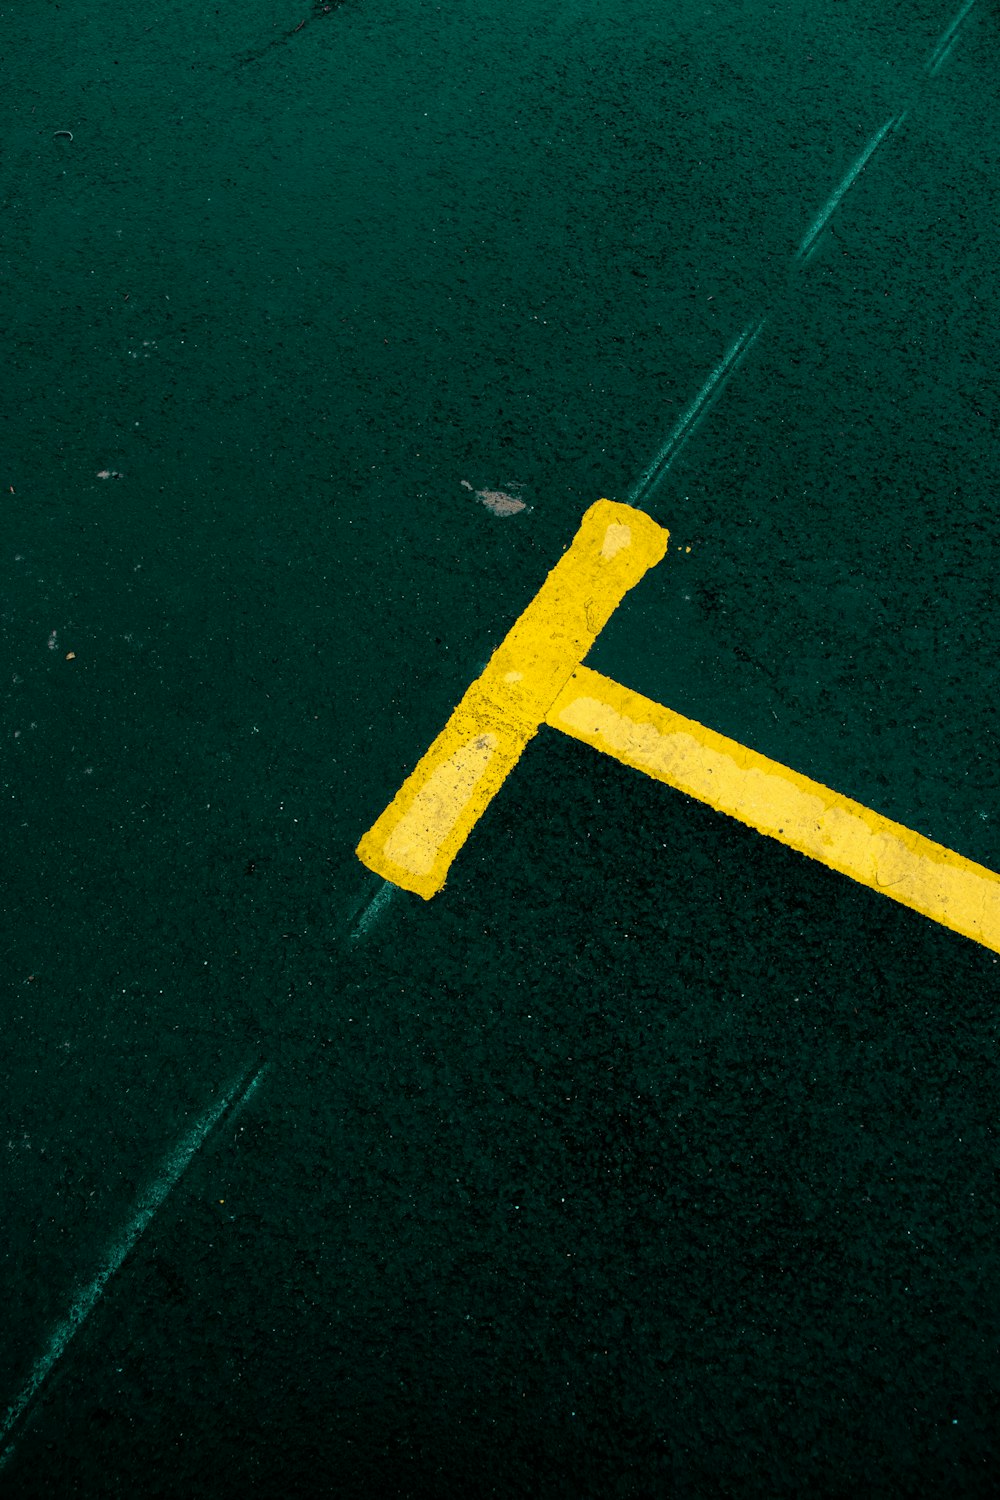 yellow metal tool on green textile